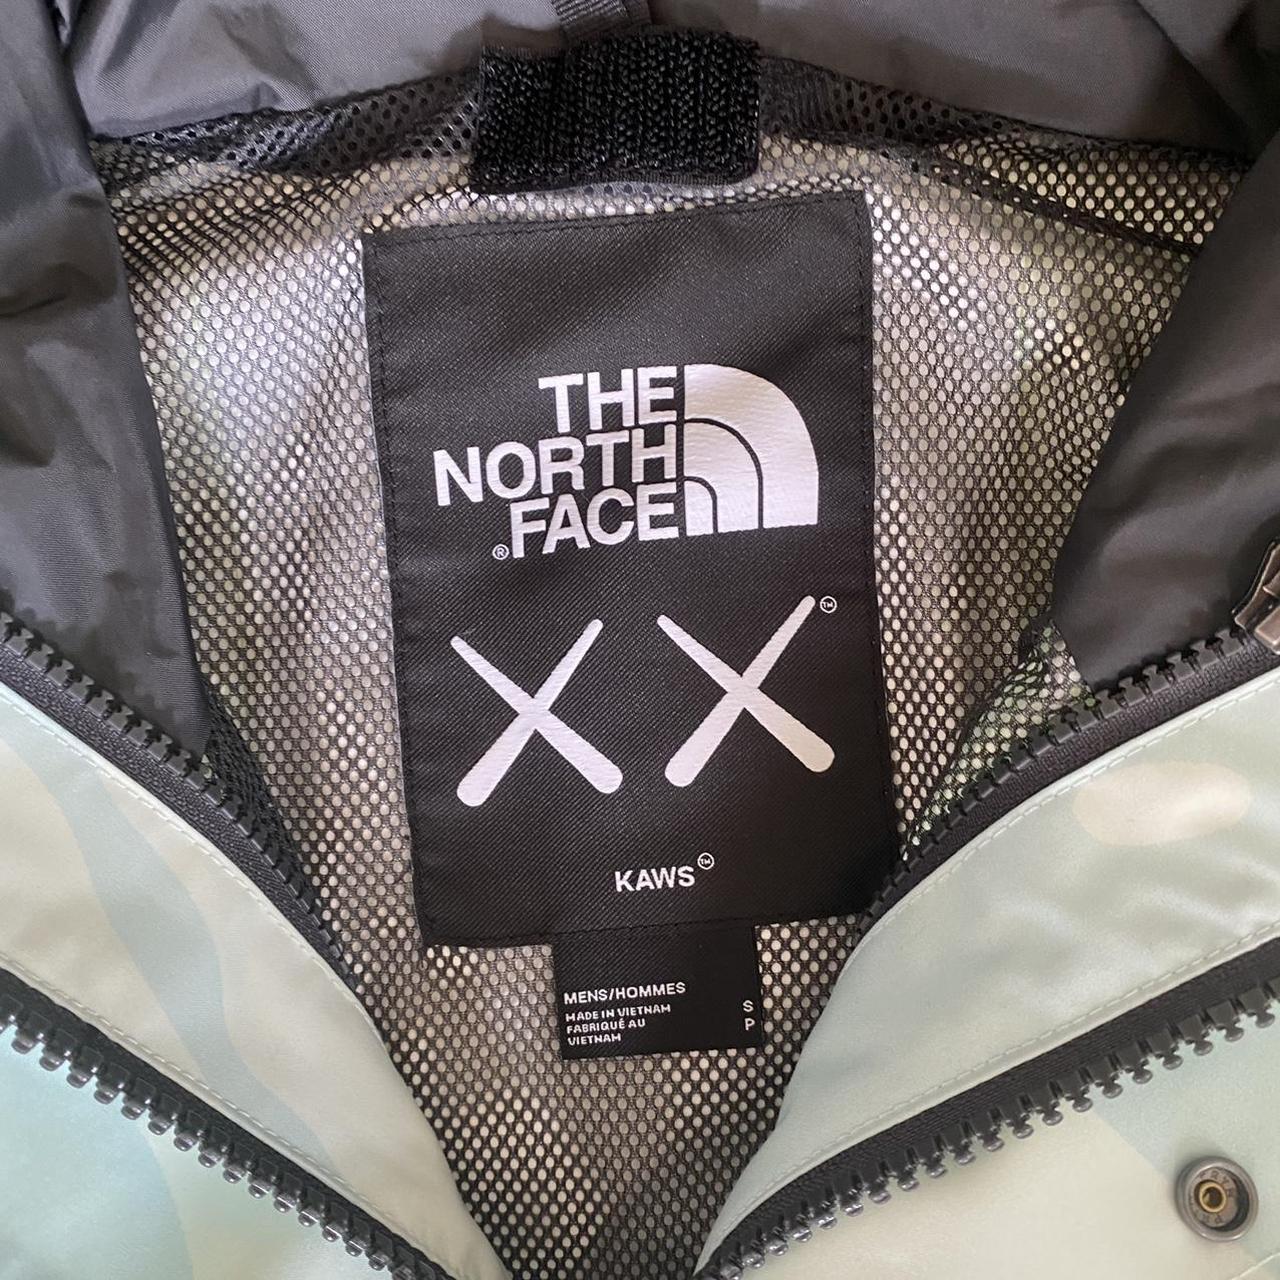 THE NORTH FACE X KAWS Retro 1986 mountain jacket -... - Depop